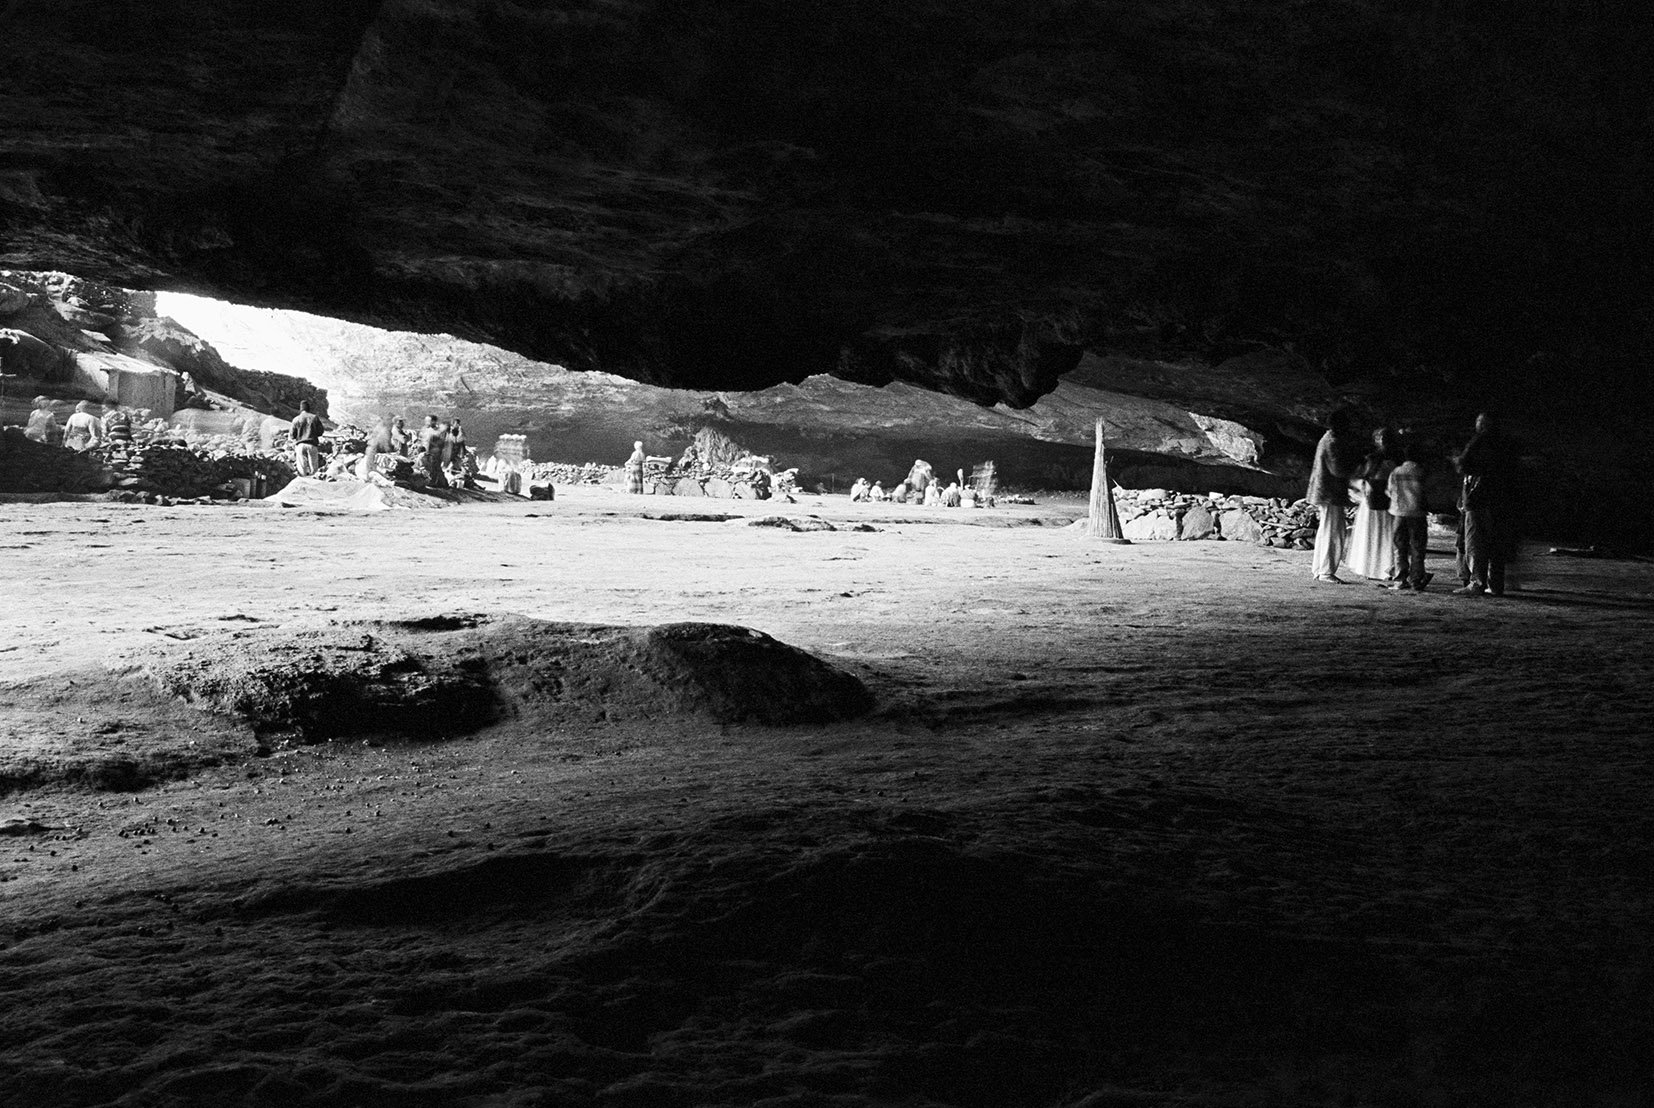  Inside Motouleng Cave, Clarens/ 1996  